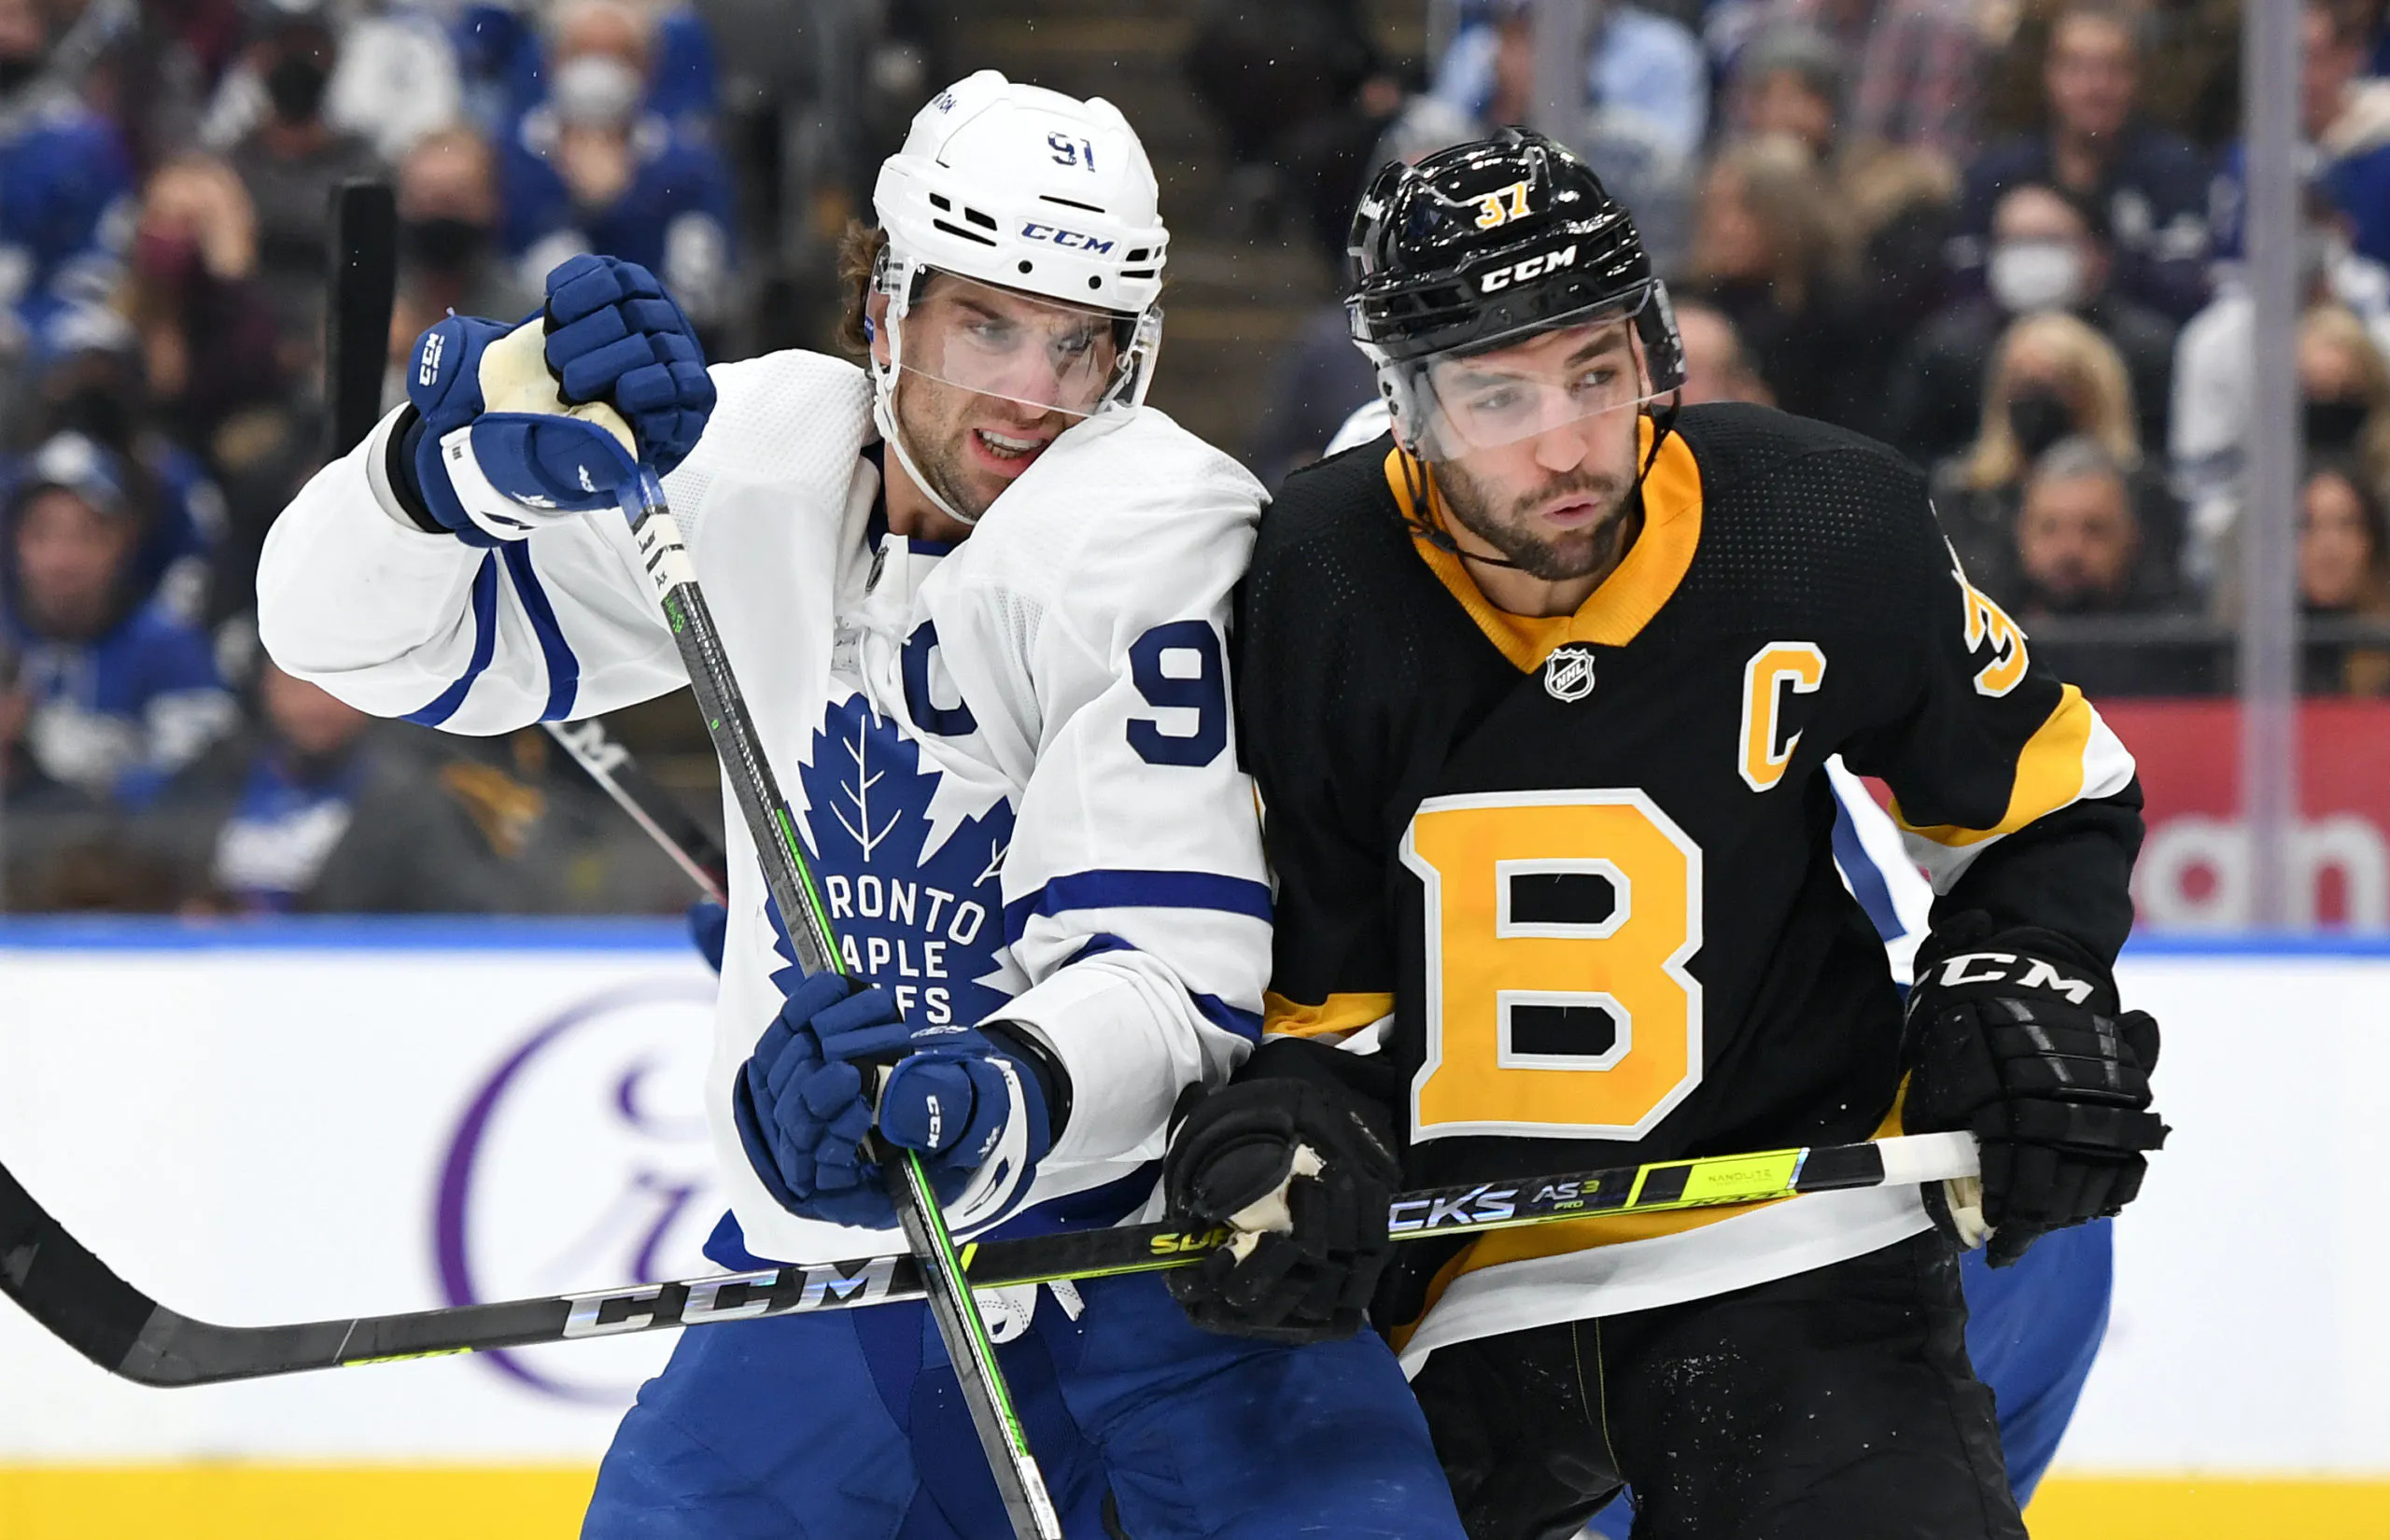 John Tavares, Patrice Bergeron, Toronto Maple Leafs vs. Boston Bruins